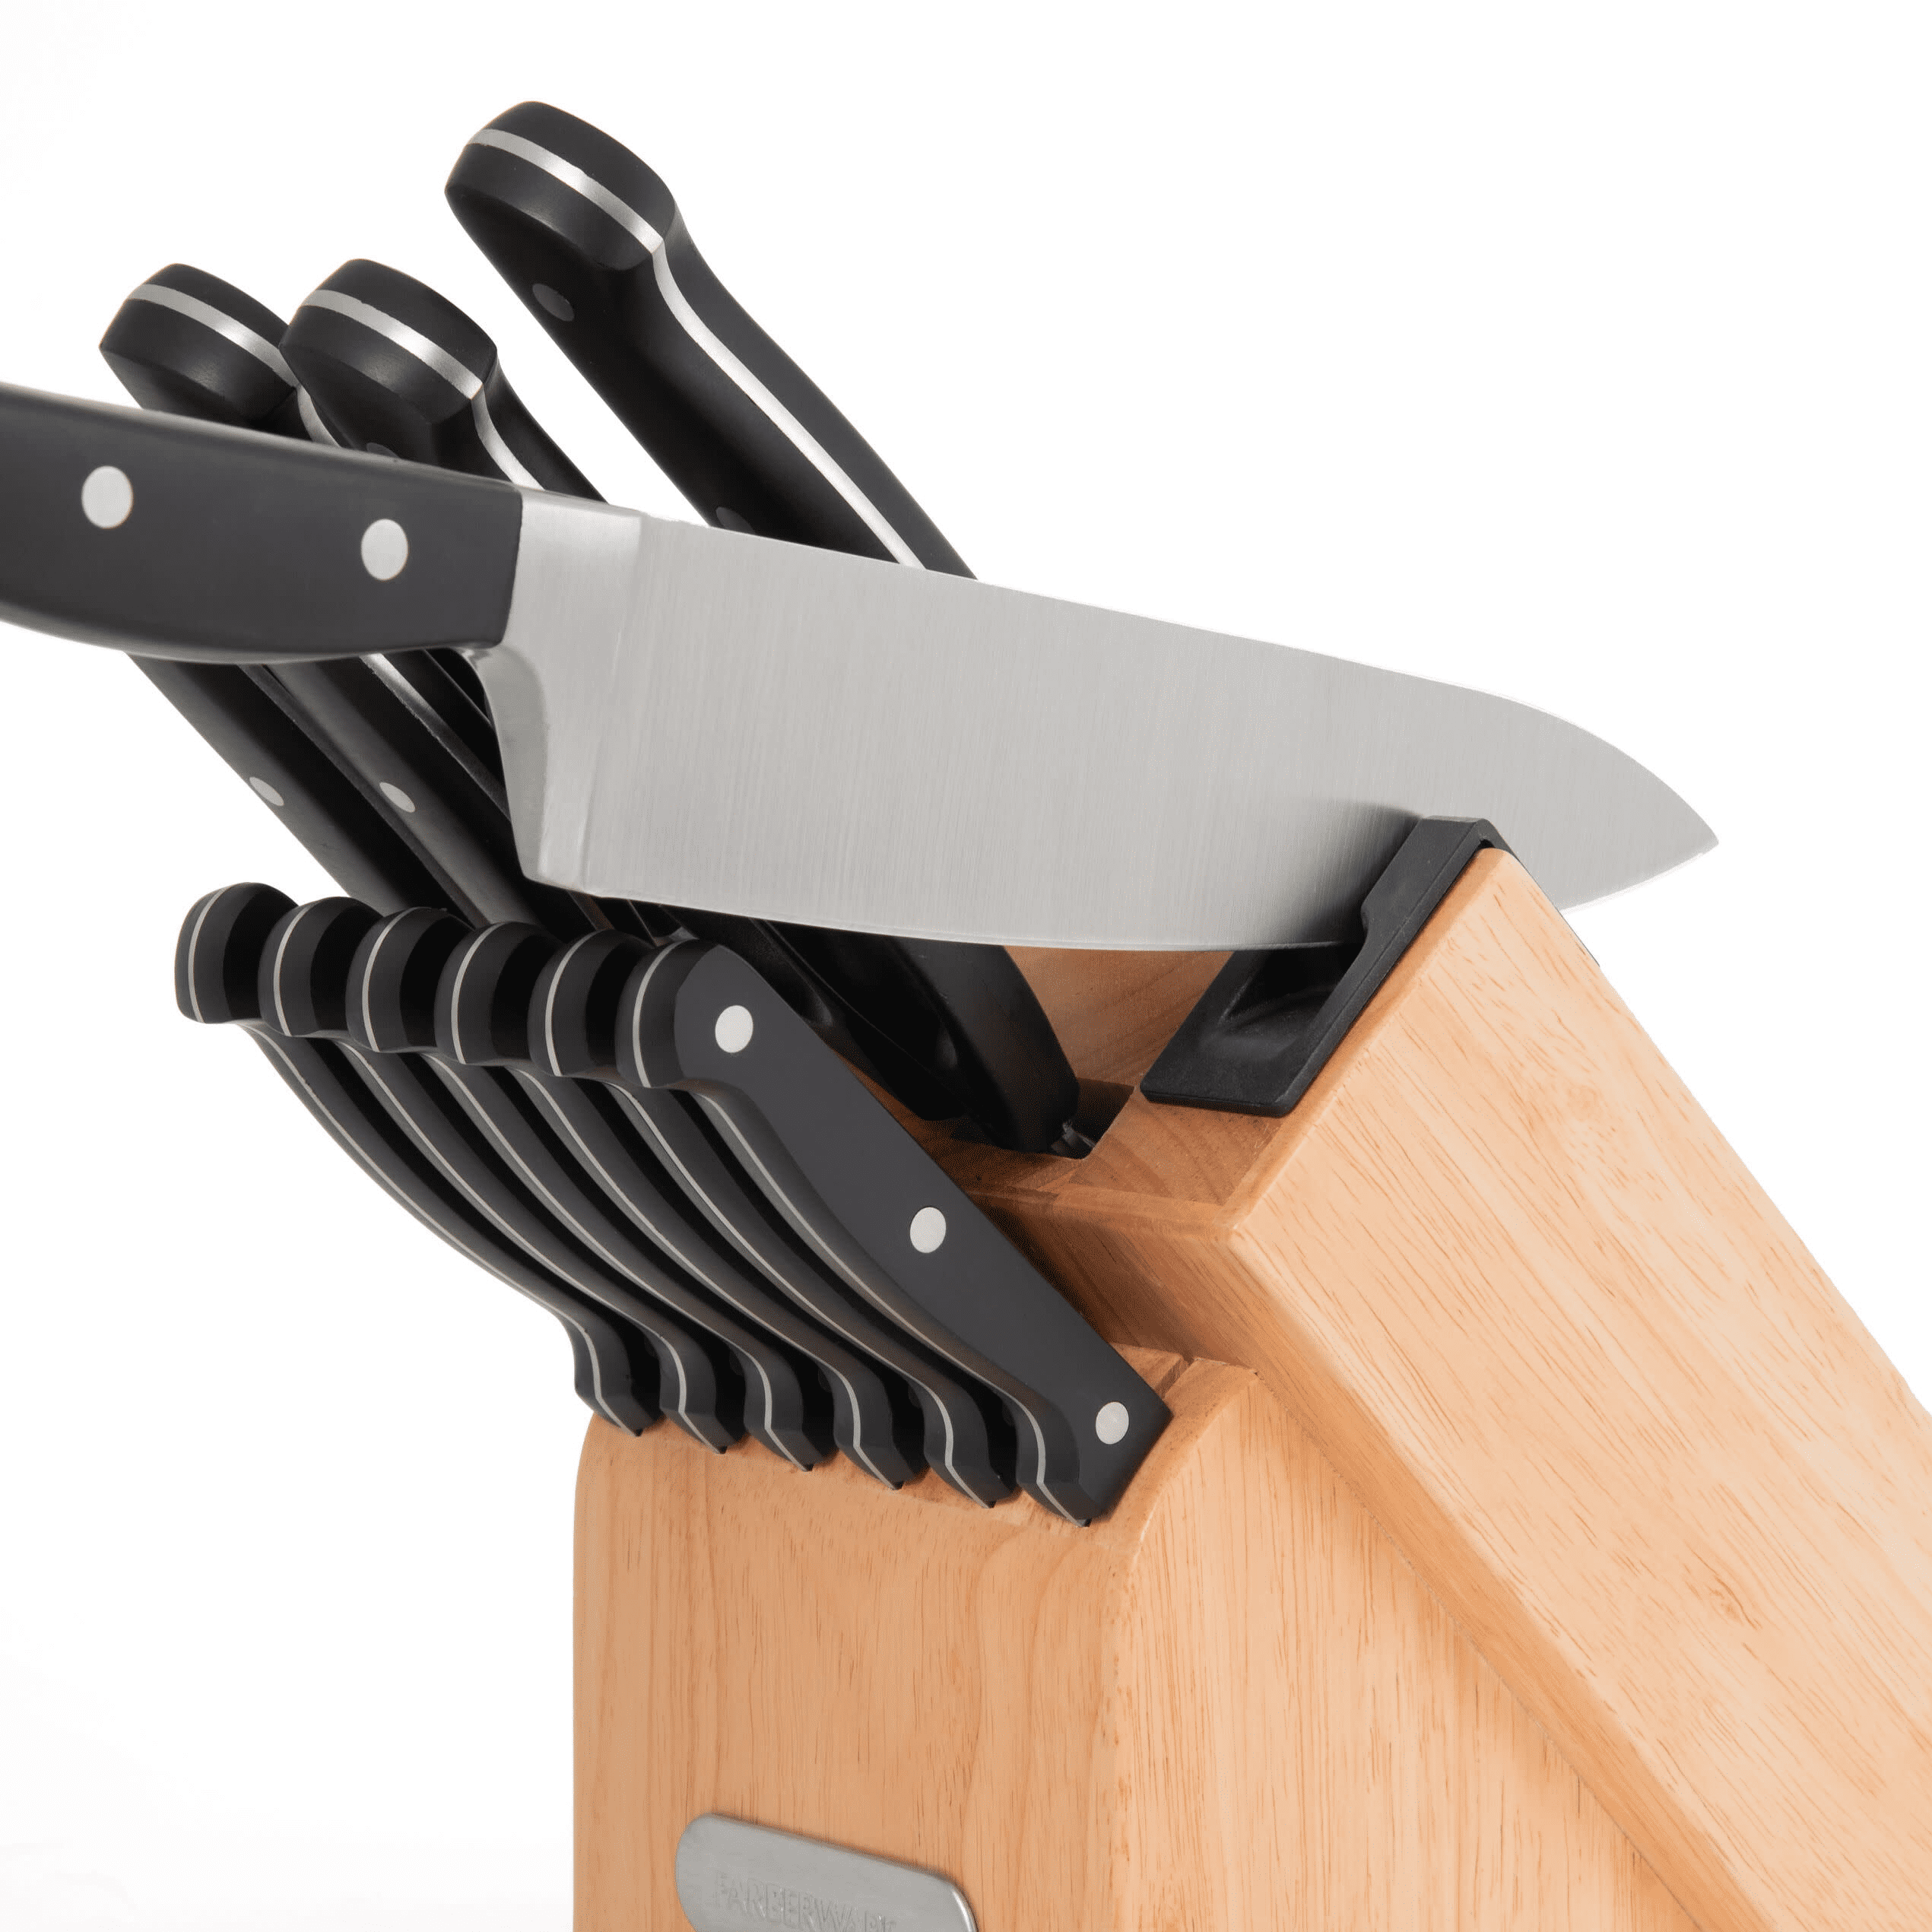  Farberware Edgekeeper Triple Riveted Slim Knife Block Set with  Built in Sharpener, 14-Piece, Navy: Home & Kitchen